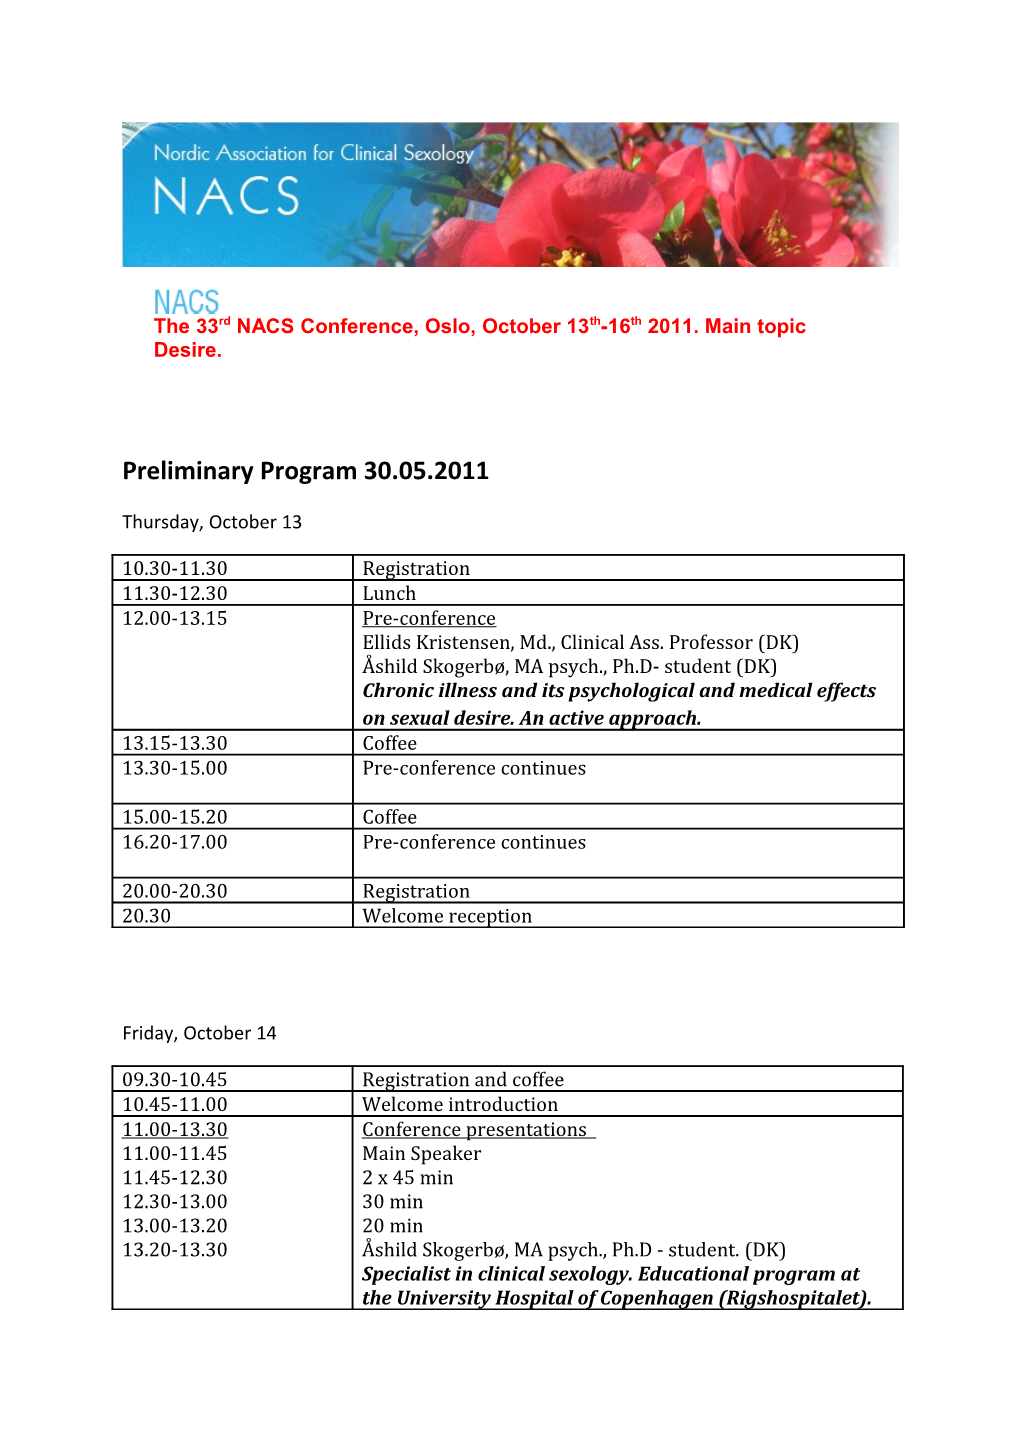 Preliminary Program 30.05.2011